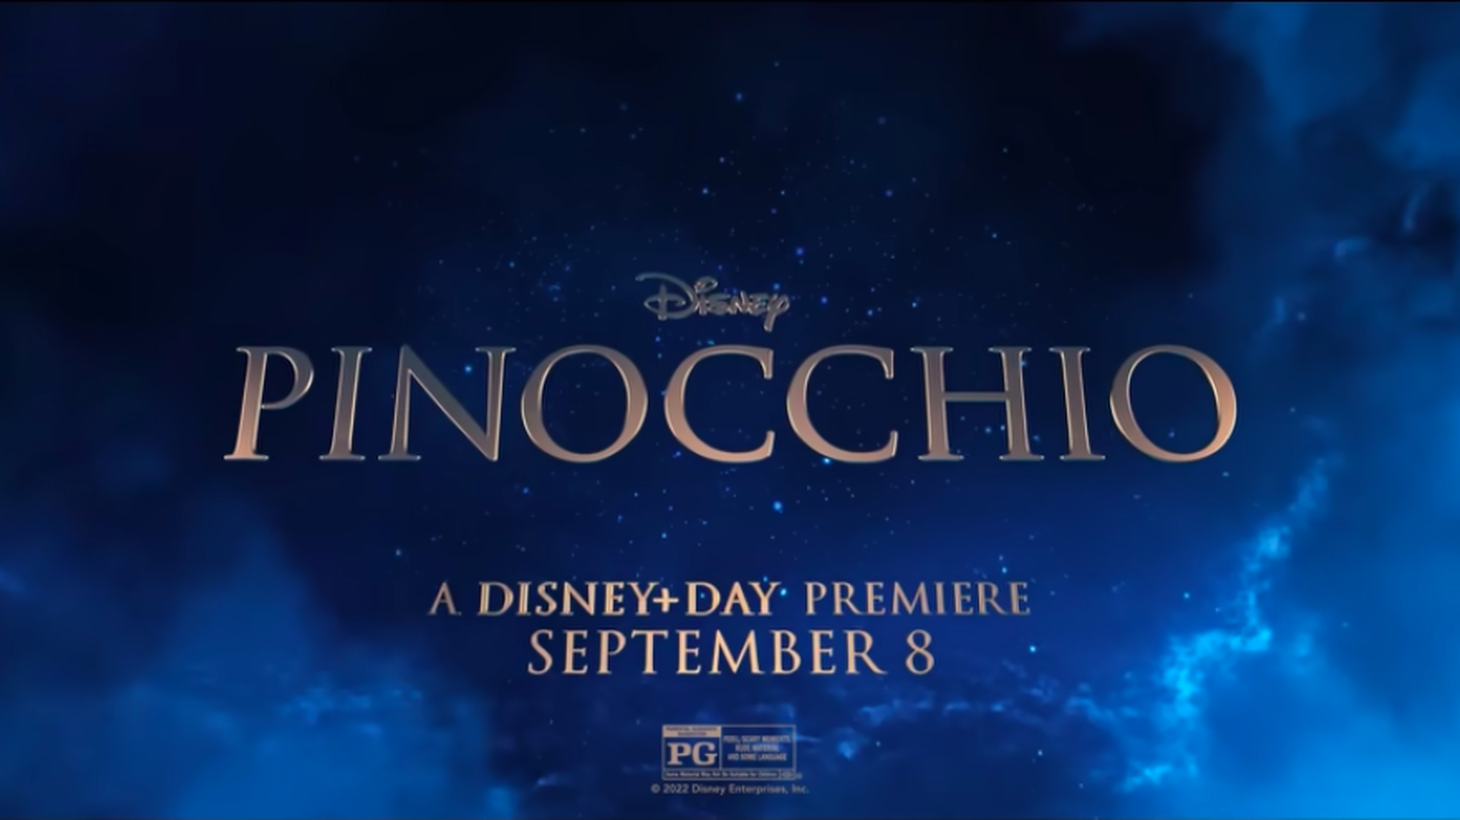 The latest “Pinocchio” stars Tom Hanks, Joseph Gordon Levitt, and Benjamin Evan Ainsworth.